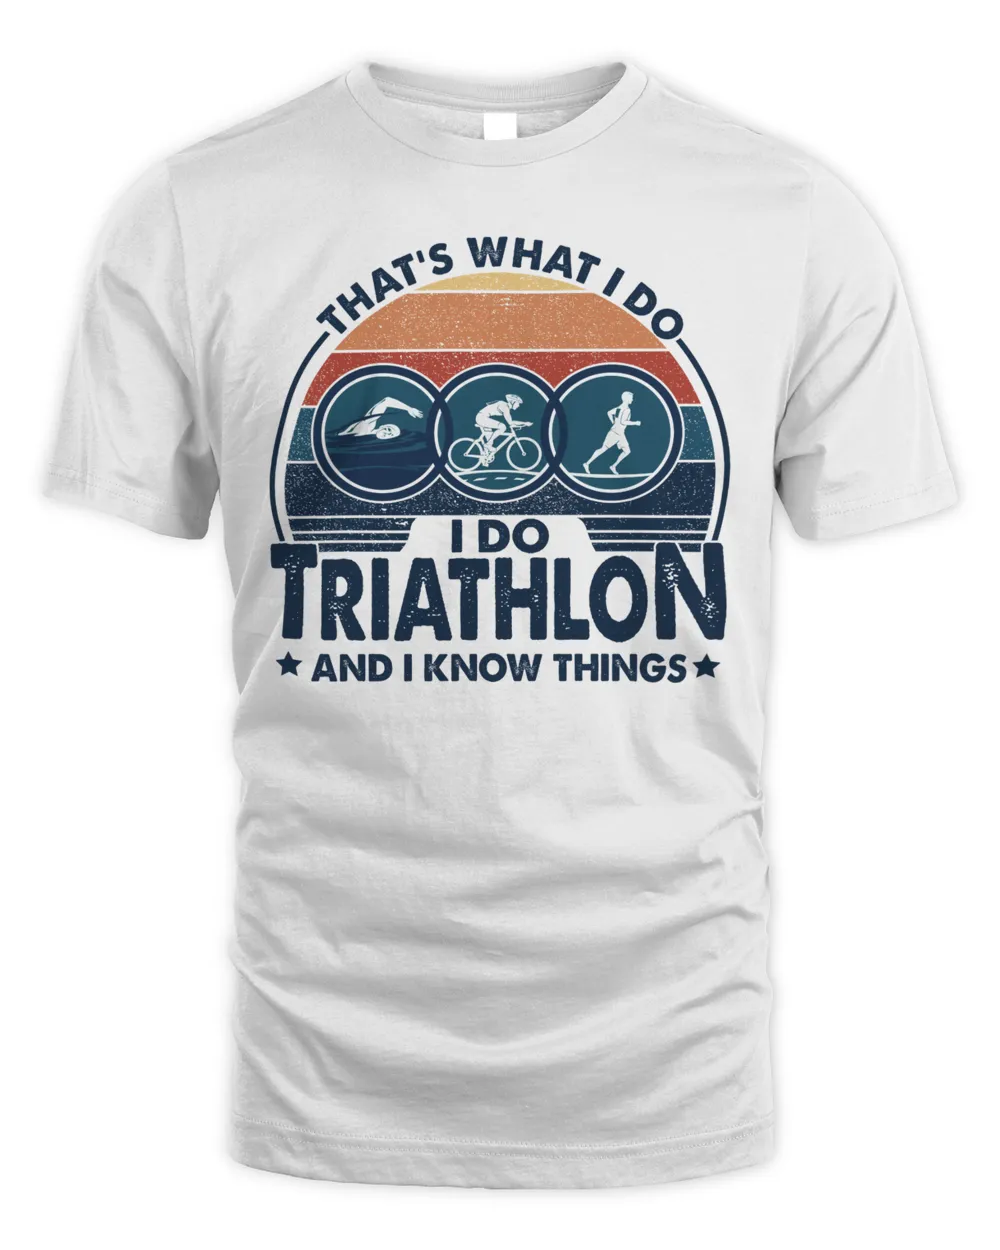 That's what i do triathlon